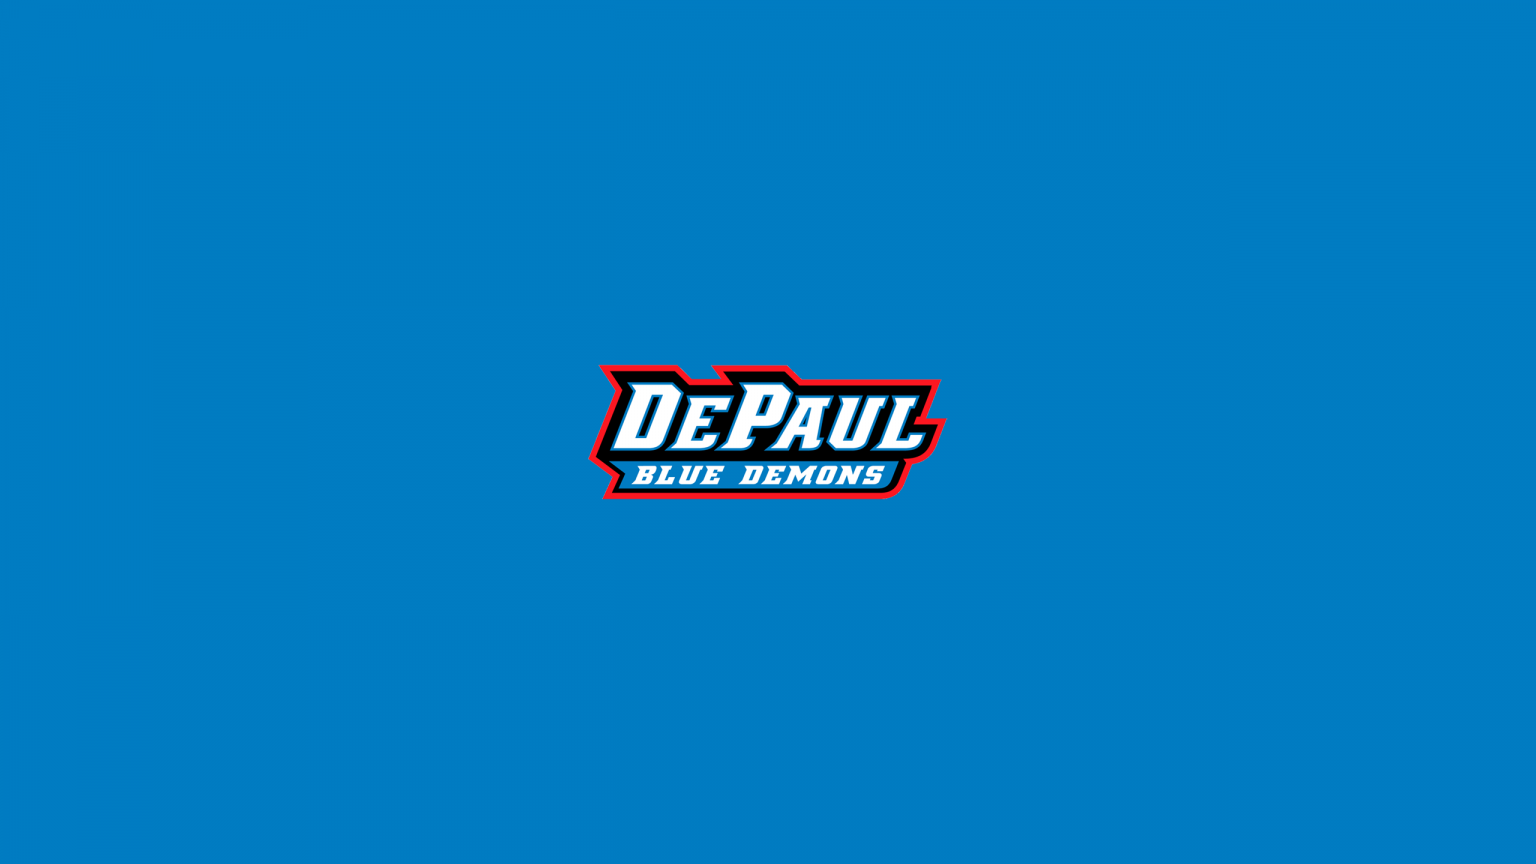 DePaul Blue Demons Basketball - NCAAB - Square Bettor